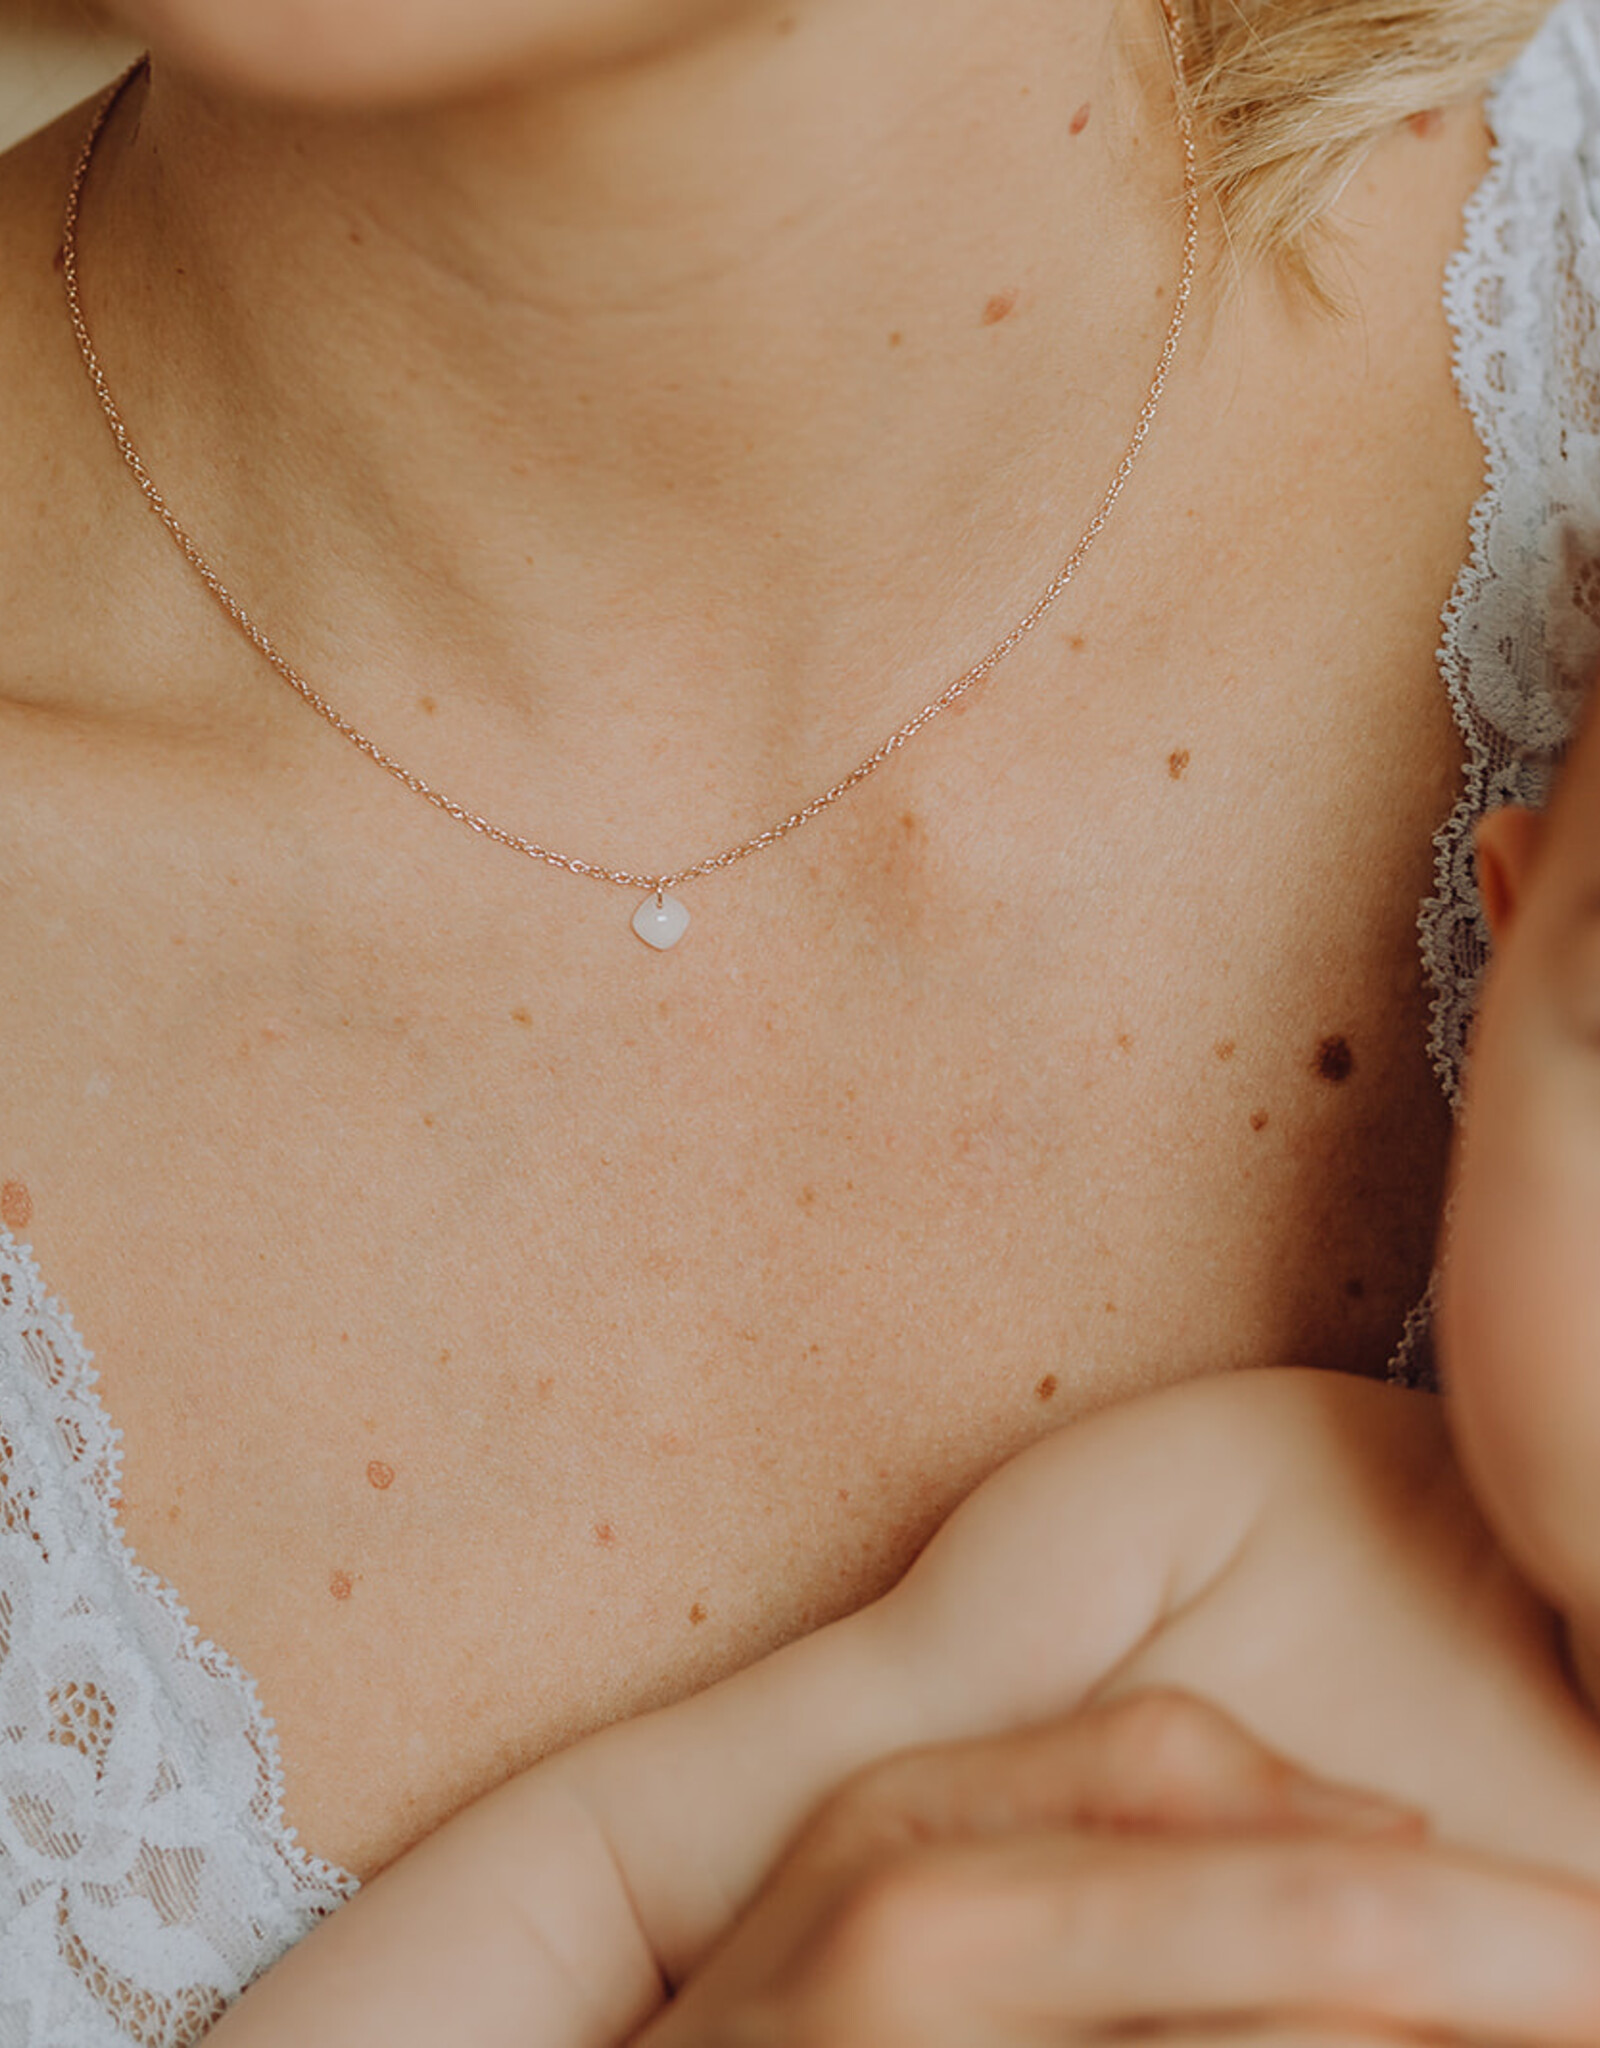 Breast milk- cushion cut gemstone necklace - breast milk jewelry